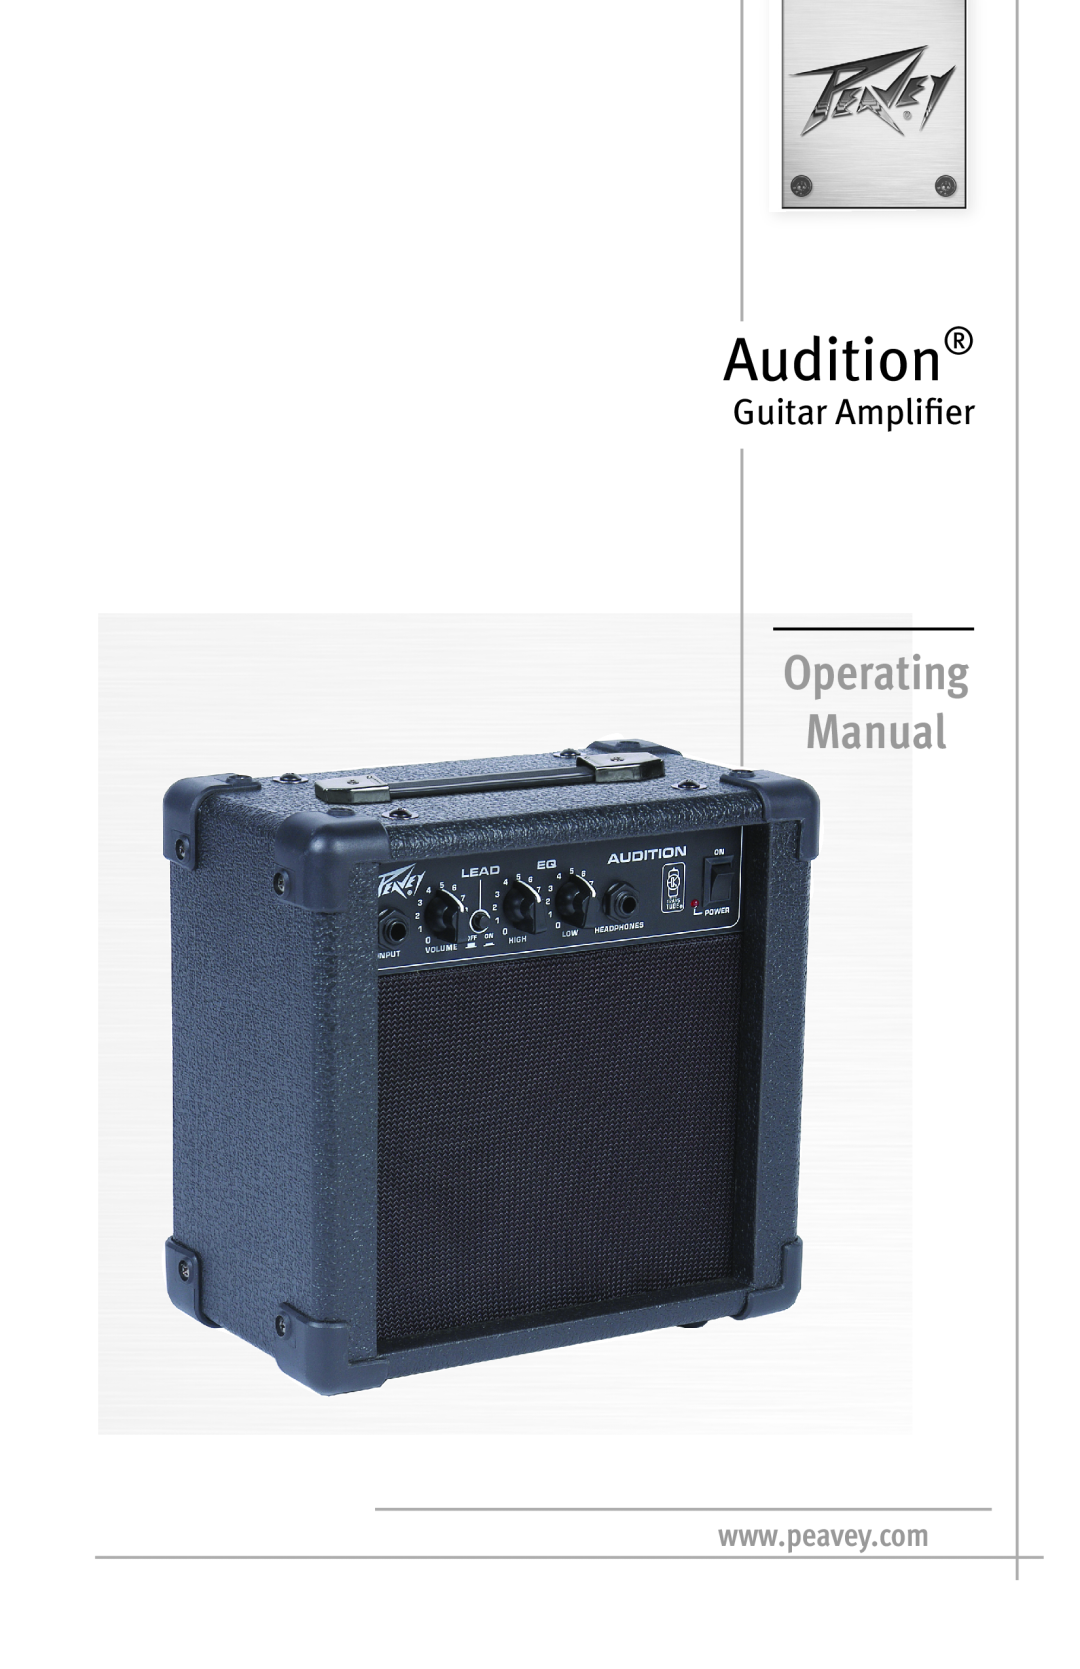 Peavey Audition manual Operating Manual, Guitar Amplifier 